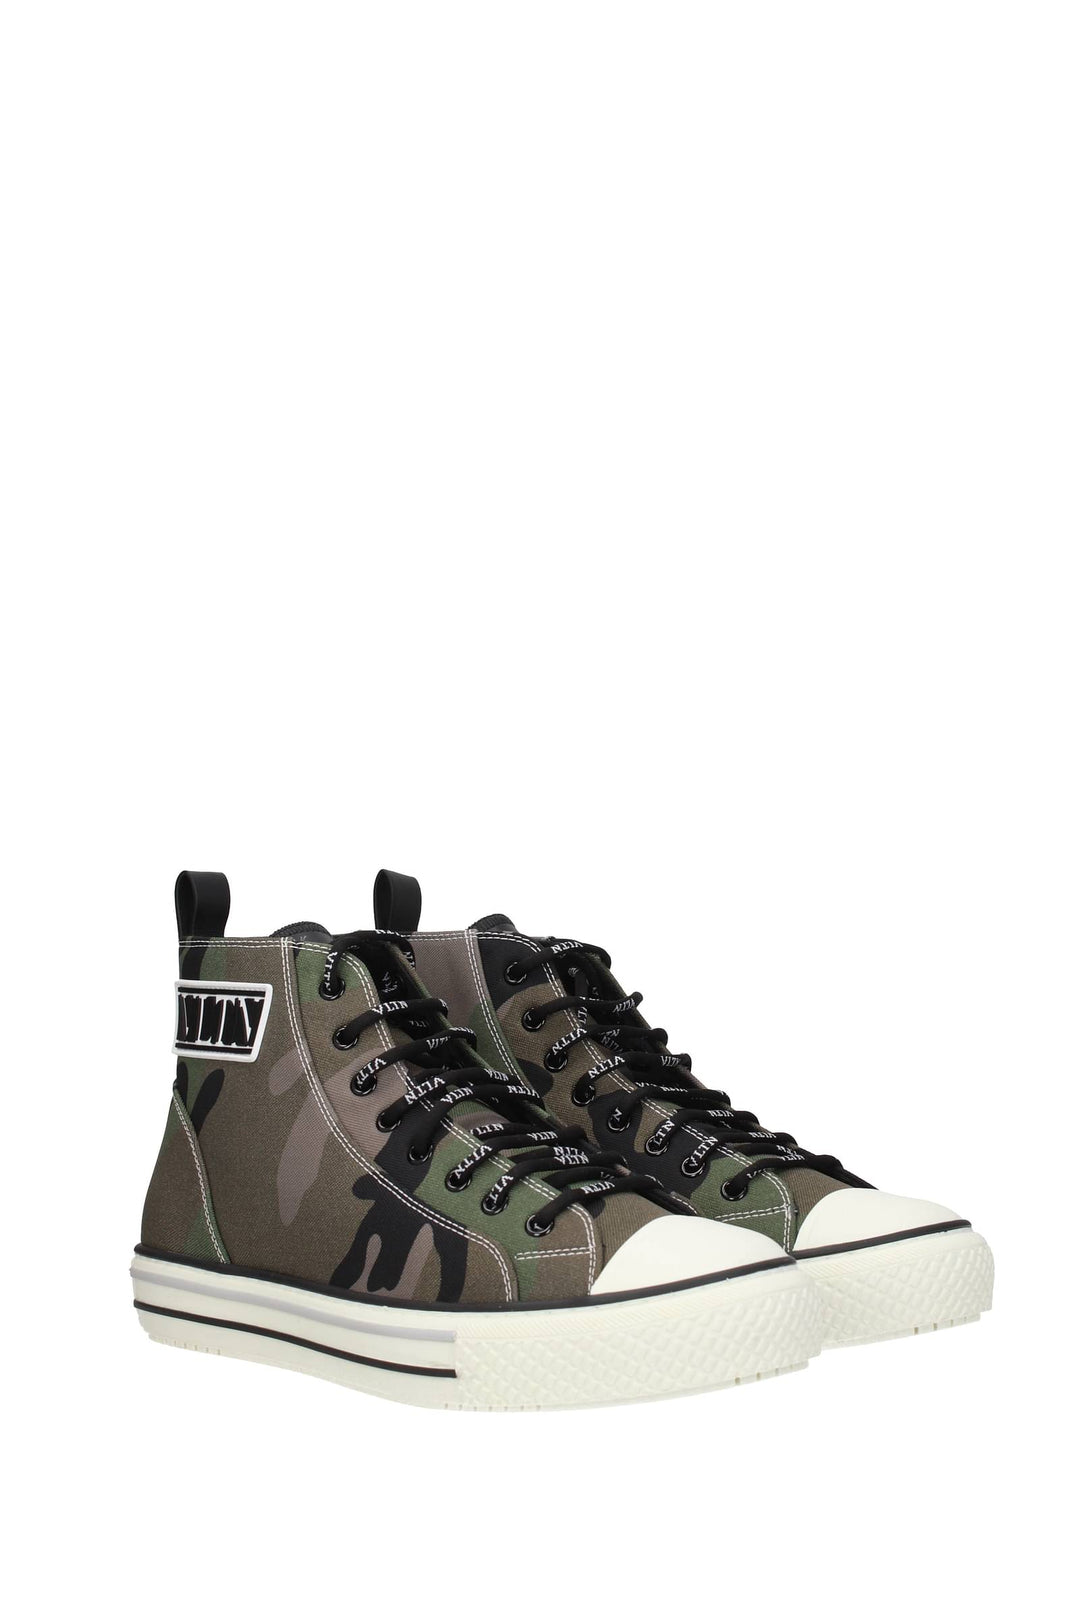 Sneakers Vltn Tessuto Verde Verde Militare - Valentino Garavani - Uomo